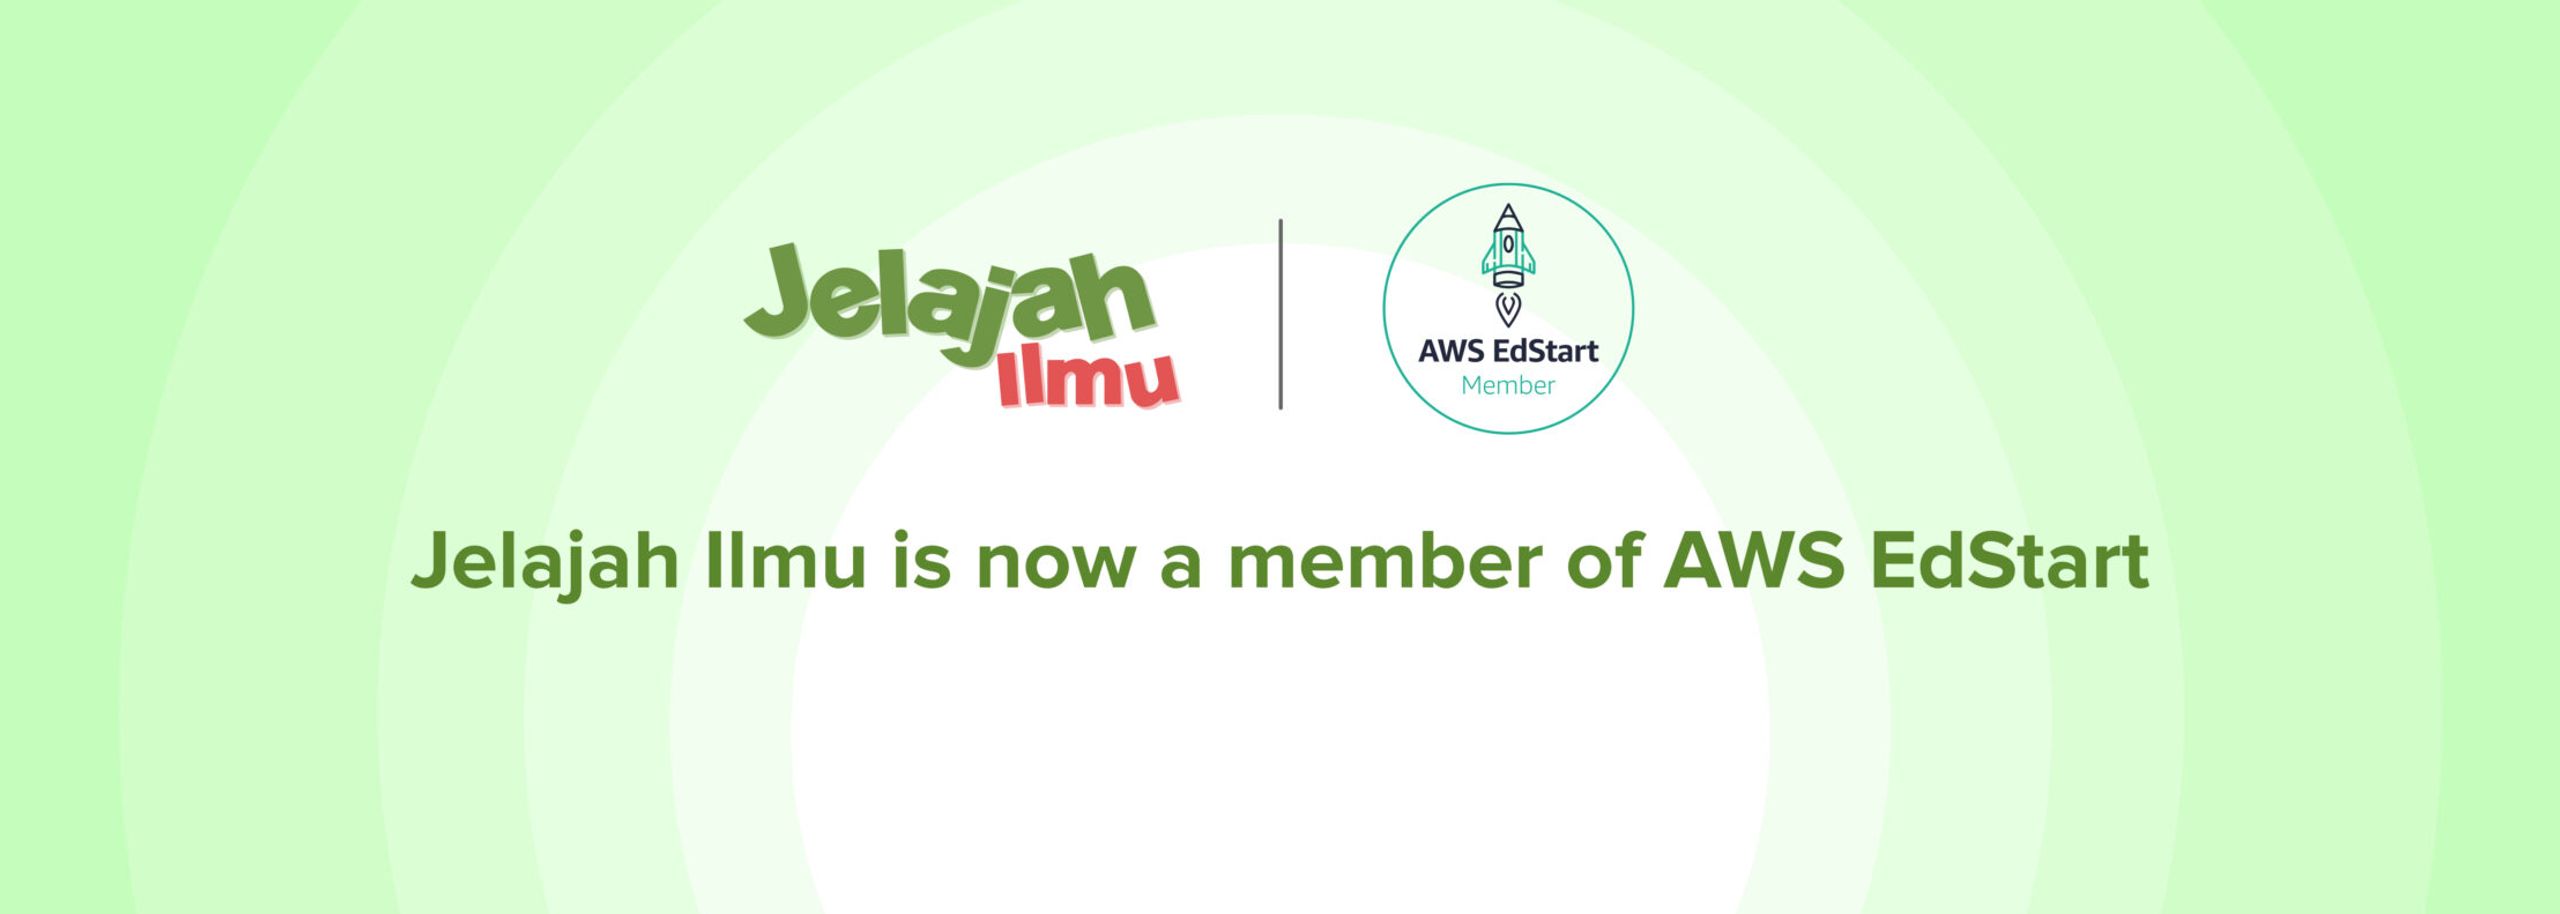 Jelajah Ilmu is now a member of AWS EdStart